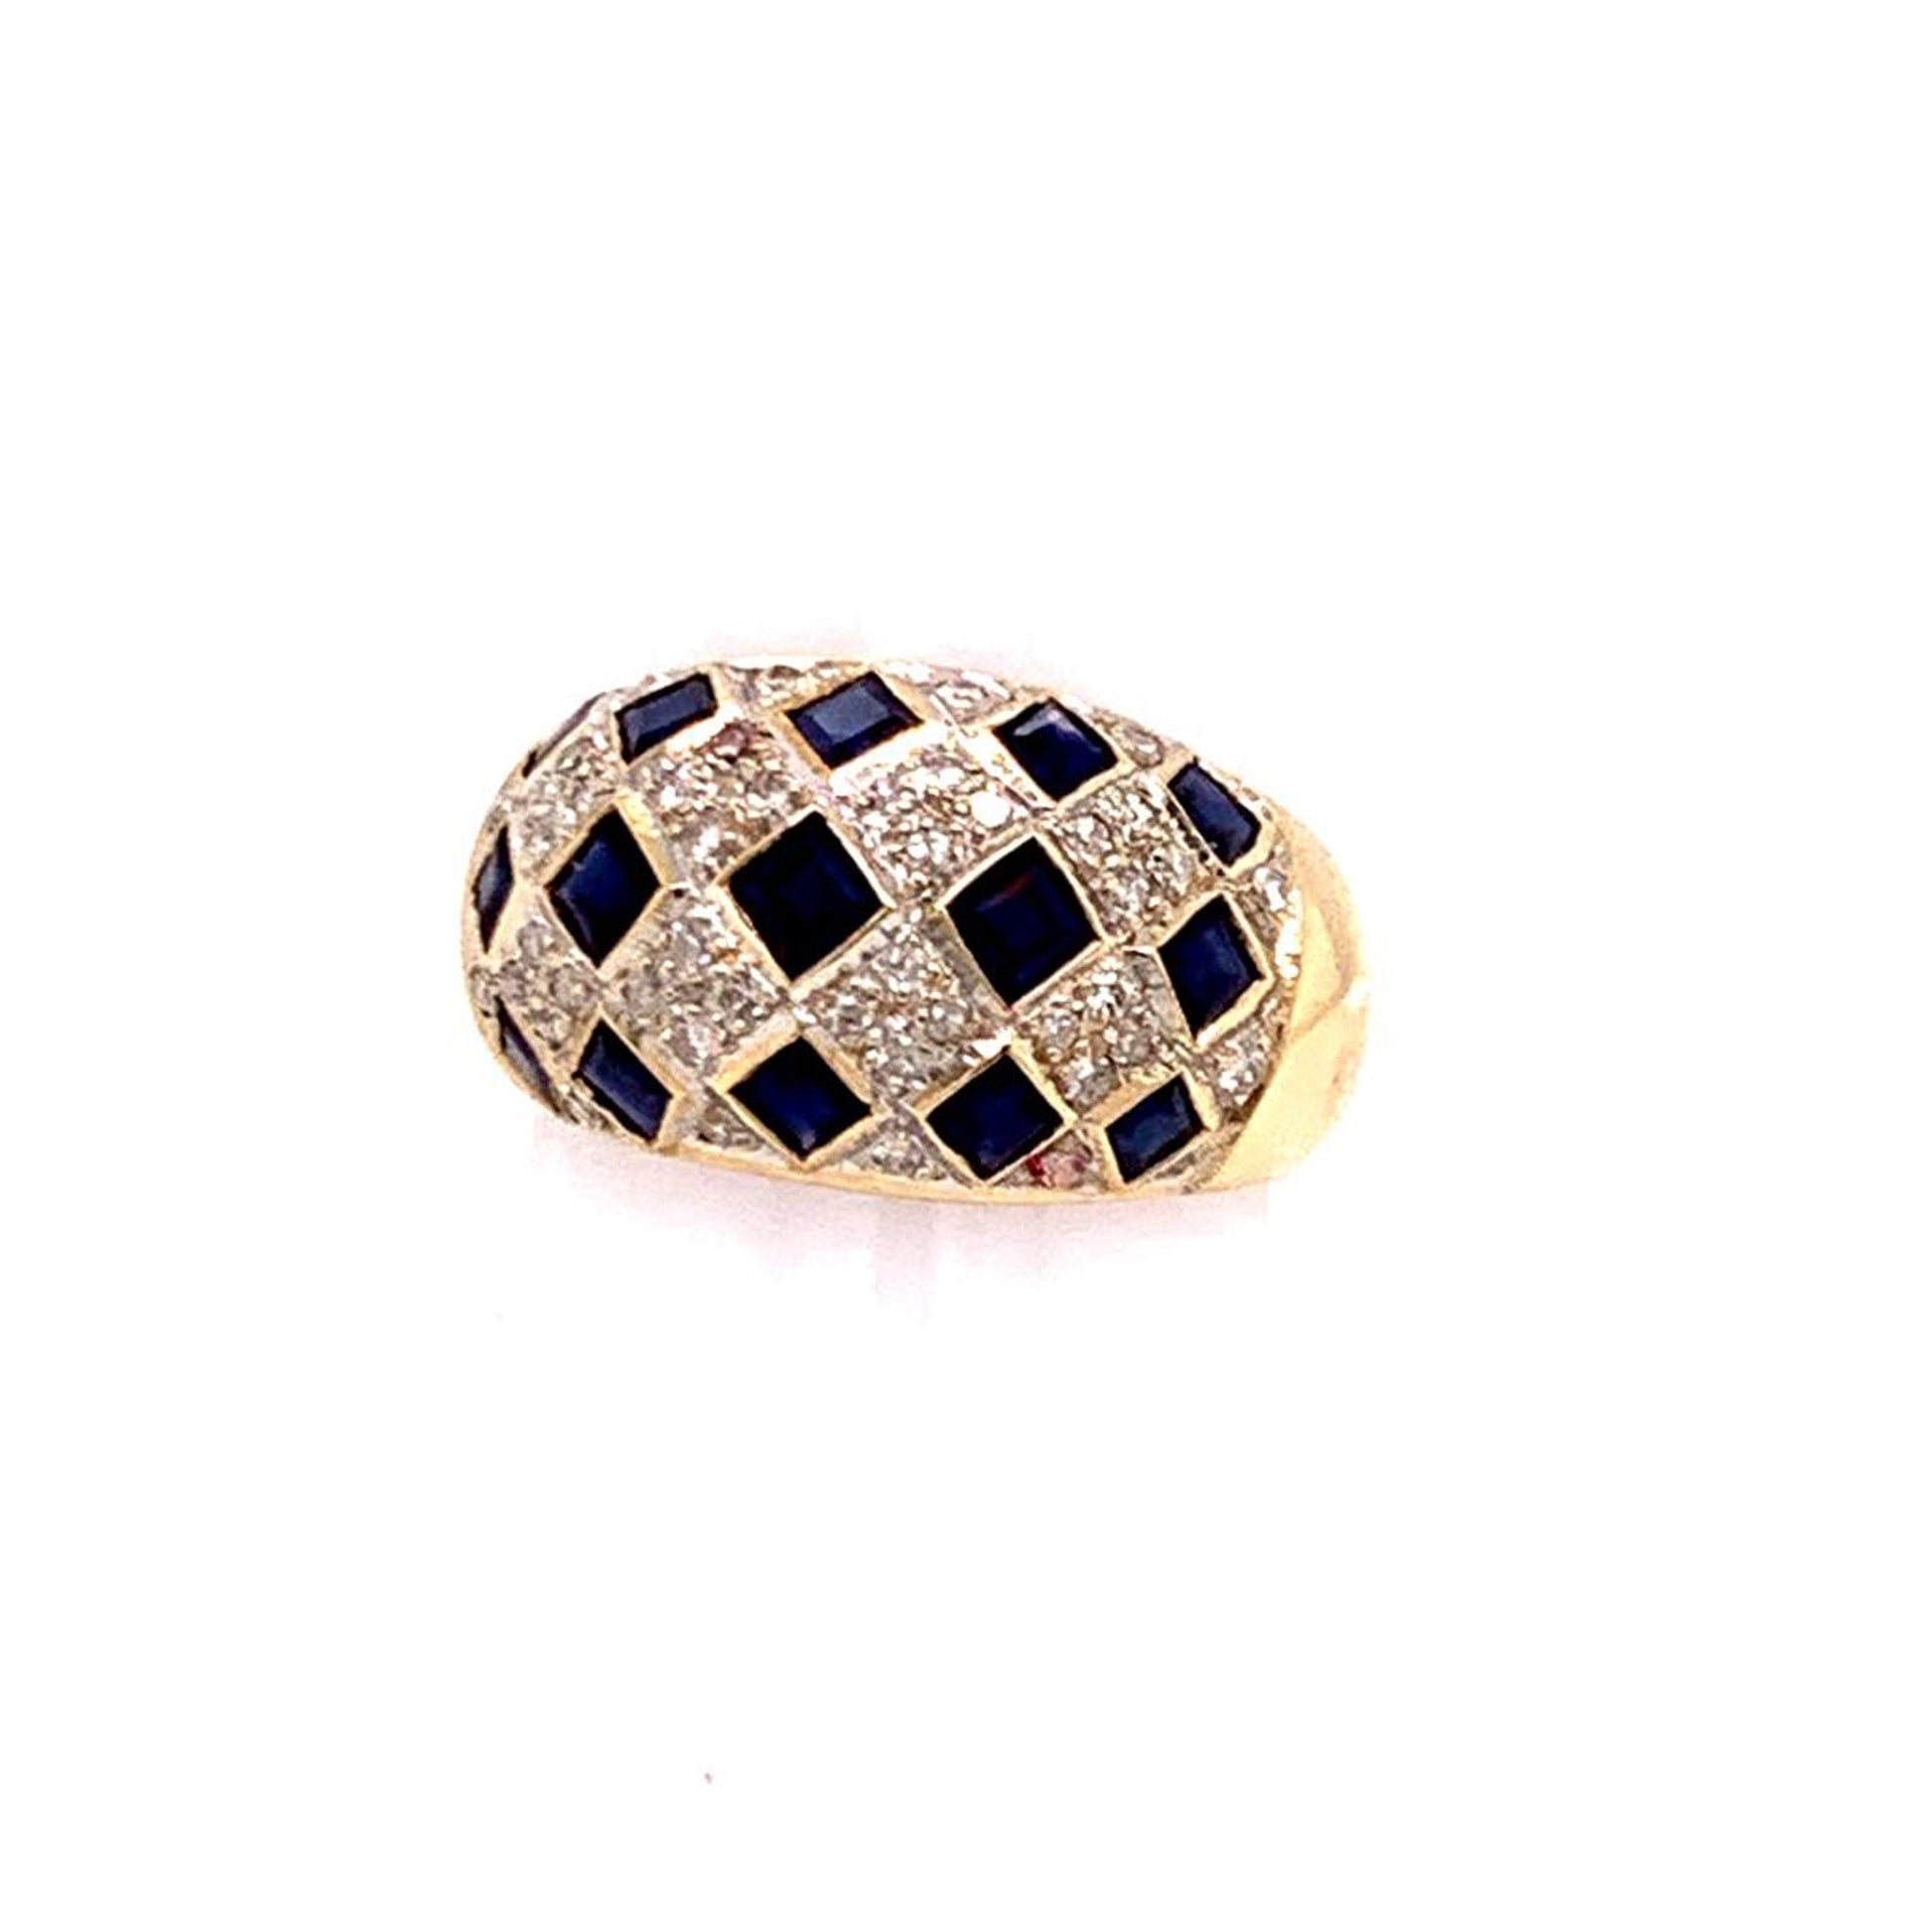 Diamond Sapphire Ring 14k Gold 2.14 TCW Checkerboard Certified $2,850 606974 - Certified Fine Jewelry